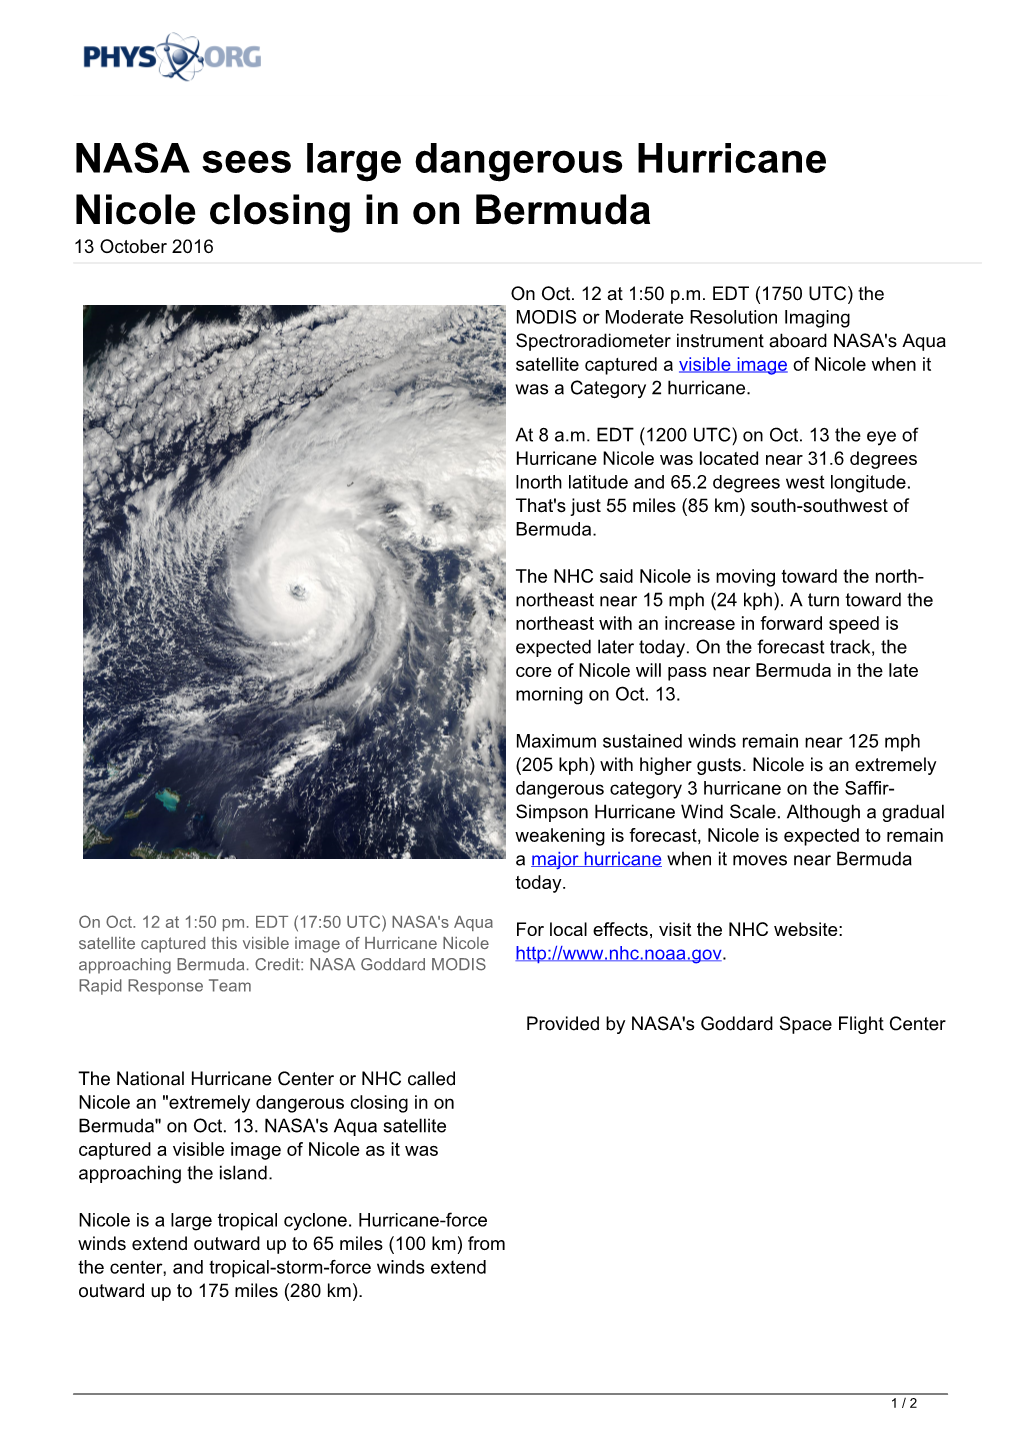 NASA Sees Large Dangerous Hurricane Nicole Closing in on Bermuda 13 October 2016